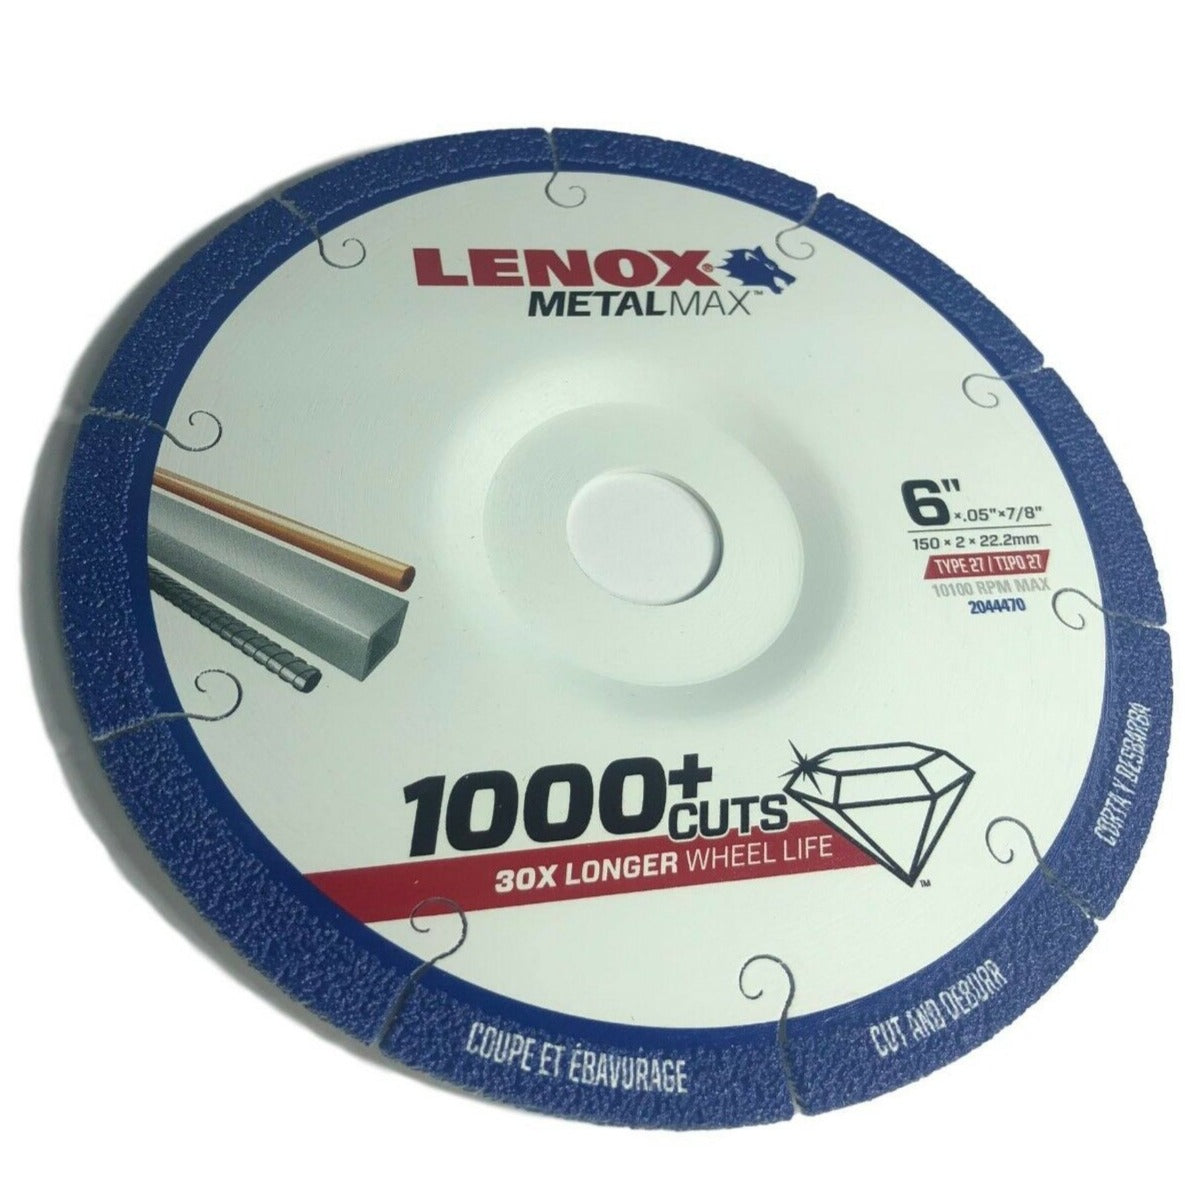 Lenox 6" 2044470 MetalMax Diamond Wheel TYPE 27 Depressed Center